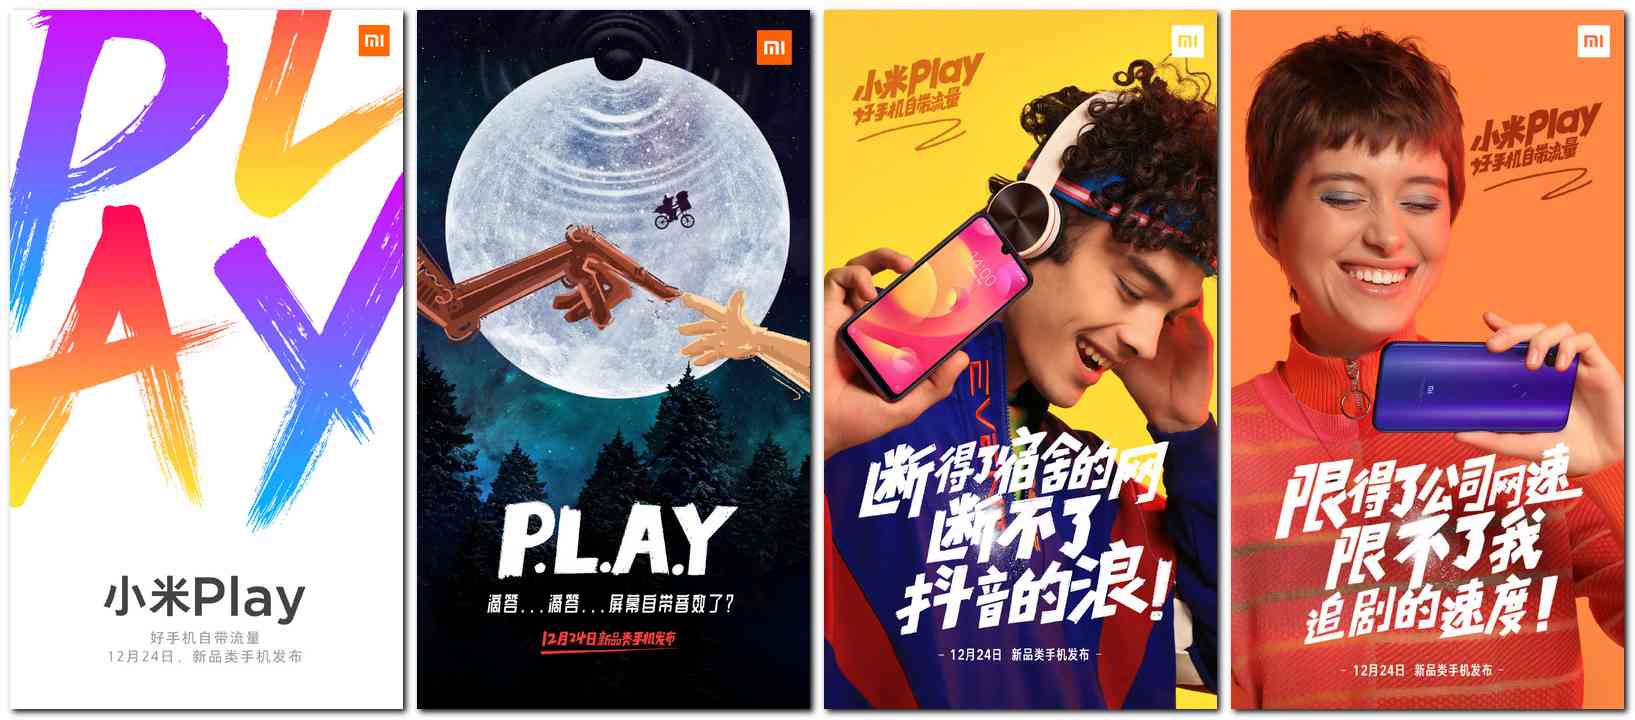 Xiaomi Play teasers. Image: Weibo/Xiaomi